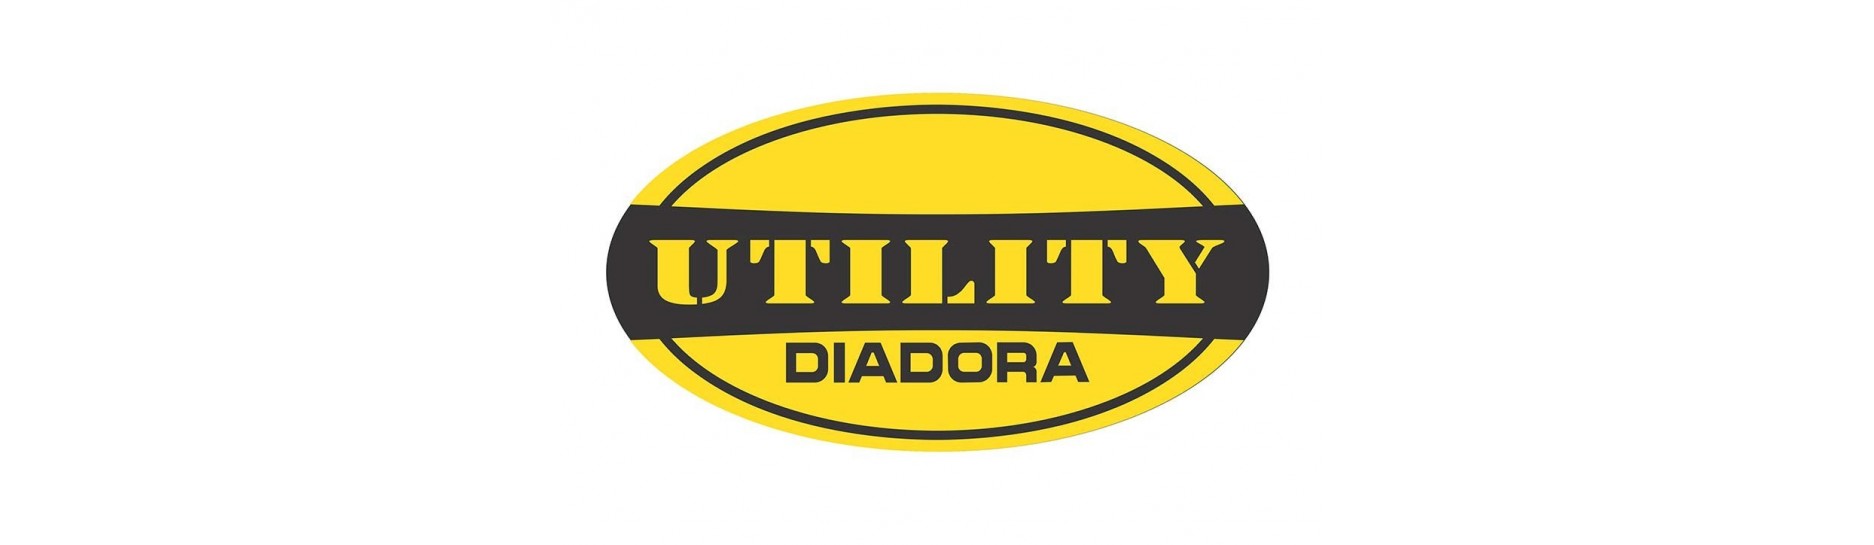 Calzature Diadora Utility